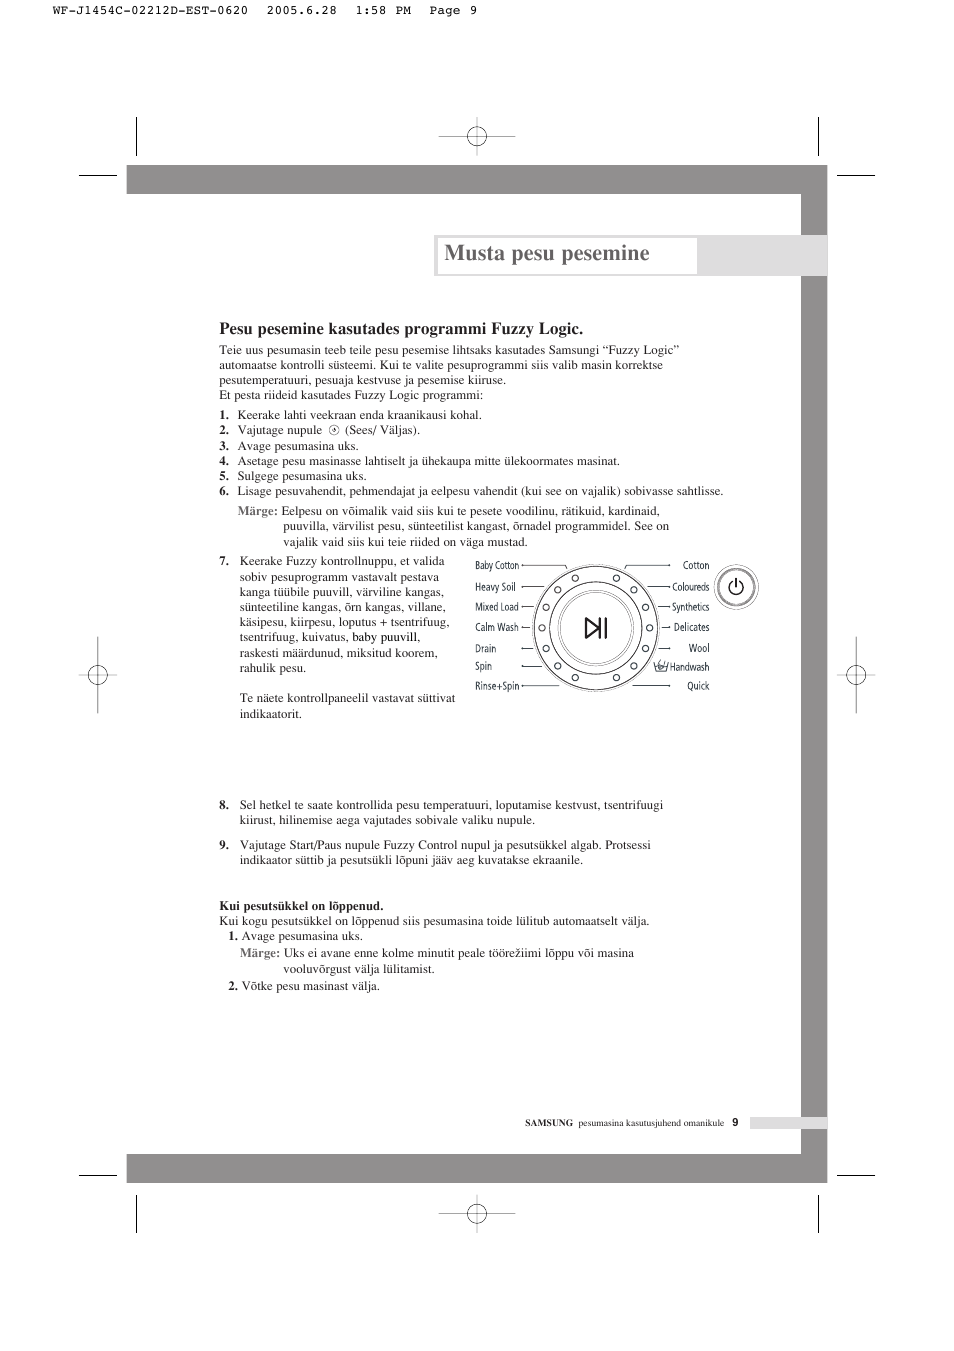 Musta pesu pesemine, Pesu pesemine kasutades programmi fuzzy logic |  Samsung WF-F1254 User Manual | Page 33 / 88 | Original mode